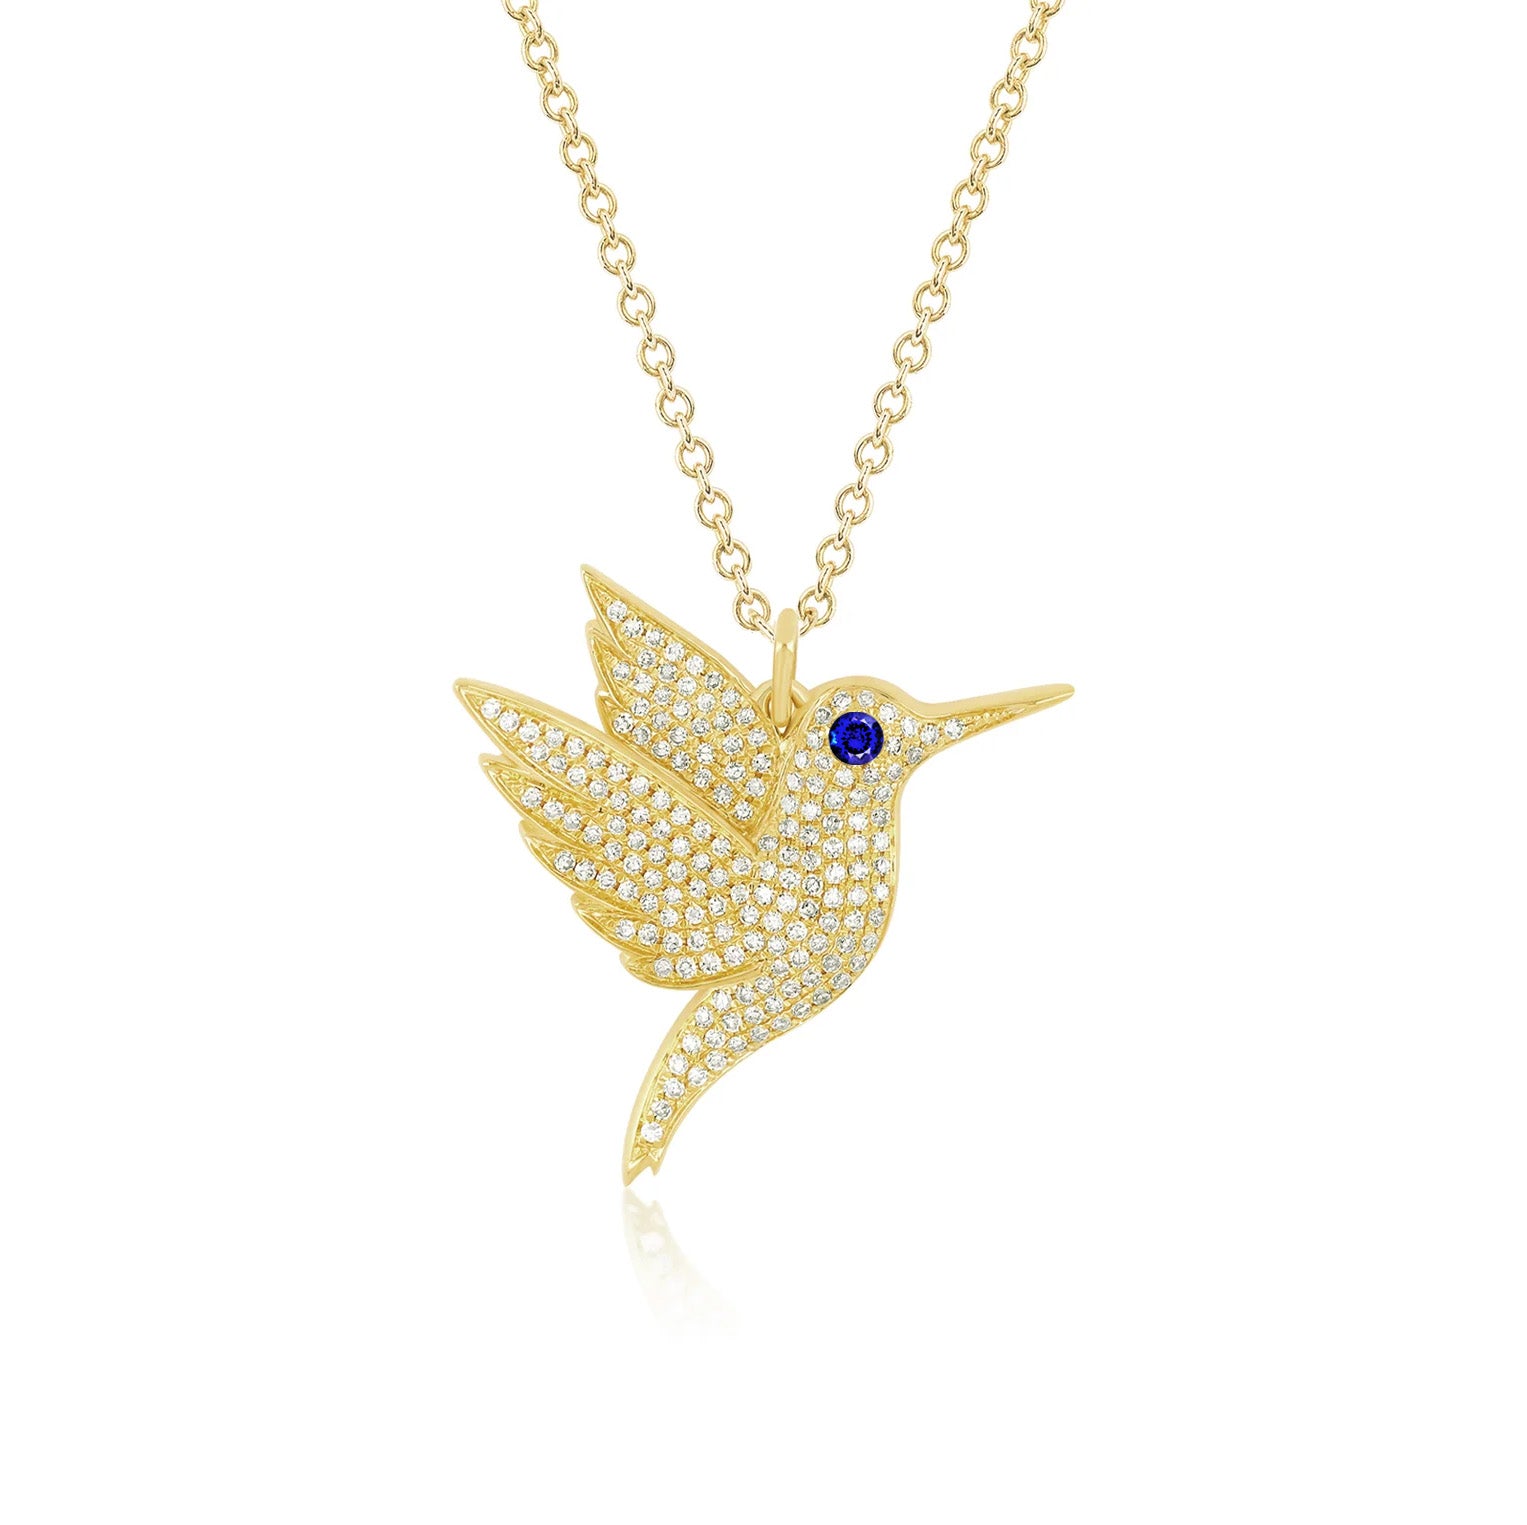 Pavé Diamond Hummingbird Necklace in 14k yellow gold with blue sapphire birthstone eye